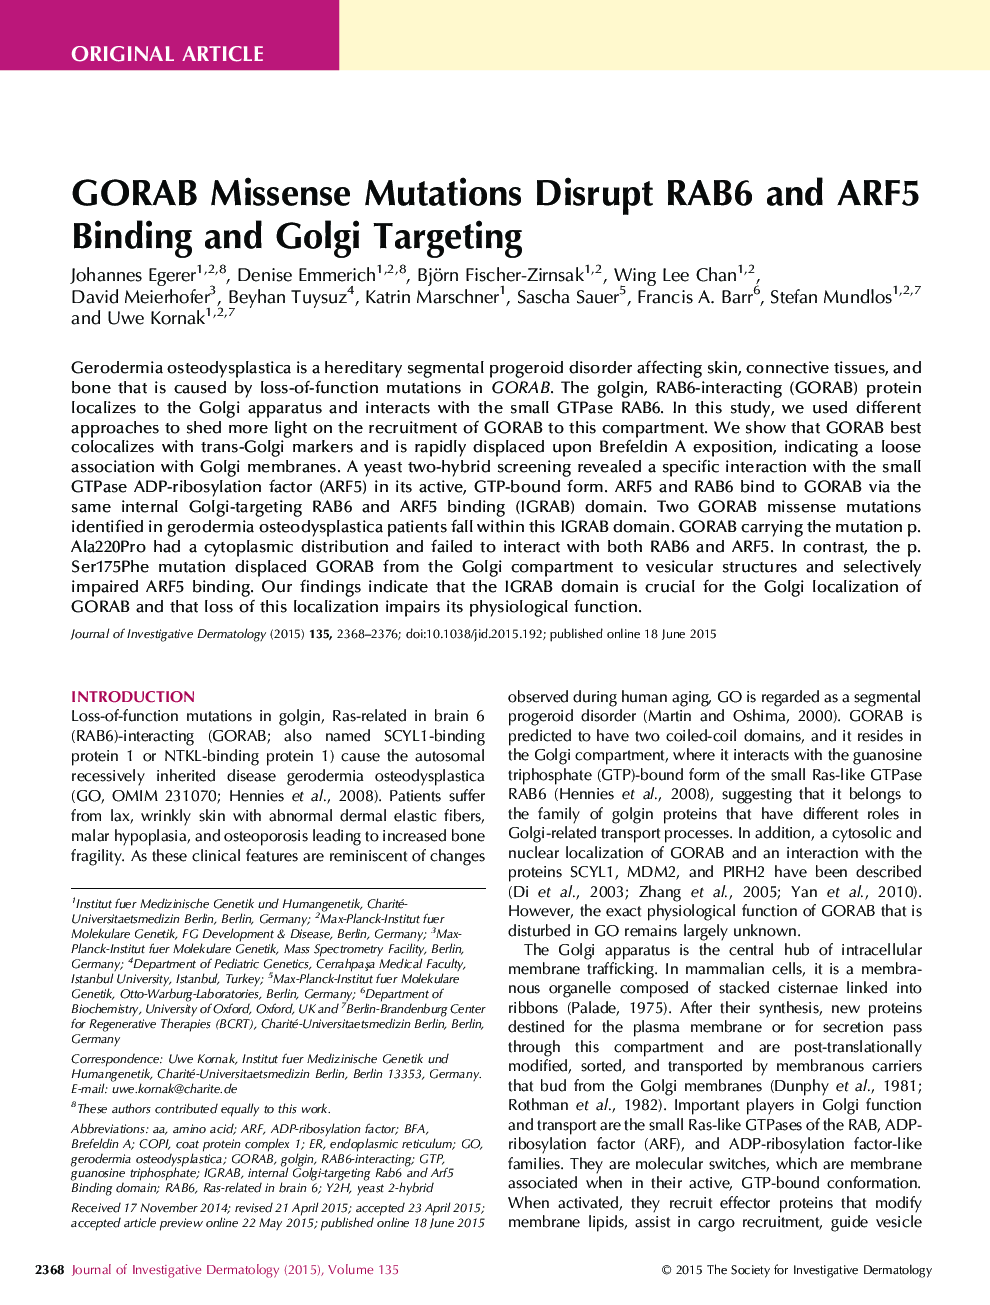 GORAB Missense Mutations Disrupt RAB6 and ARF5 Binding and Golgi Targeting 